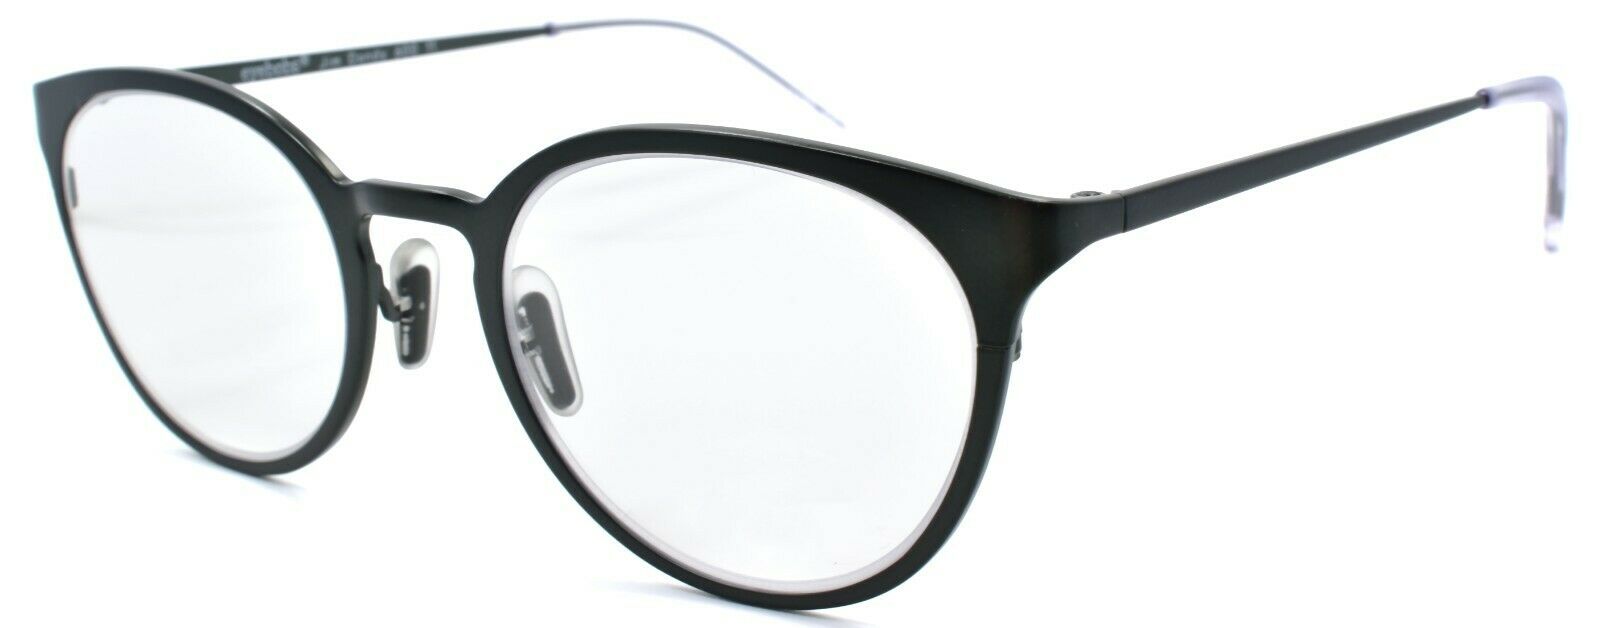 1-Eyebobs Jim Dandy 600 11 Reading Glasses Dark Green +3.00-842754138116-IKSpecs